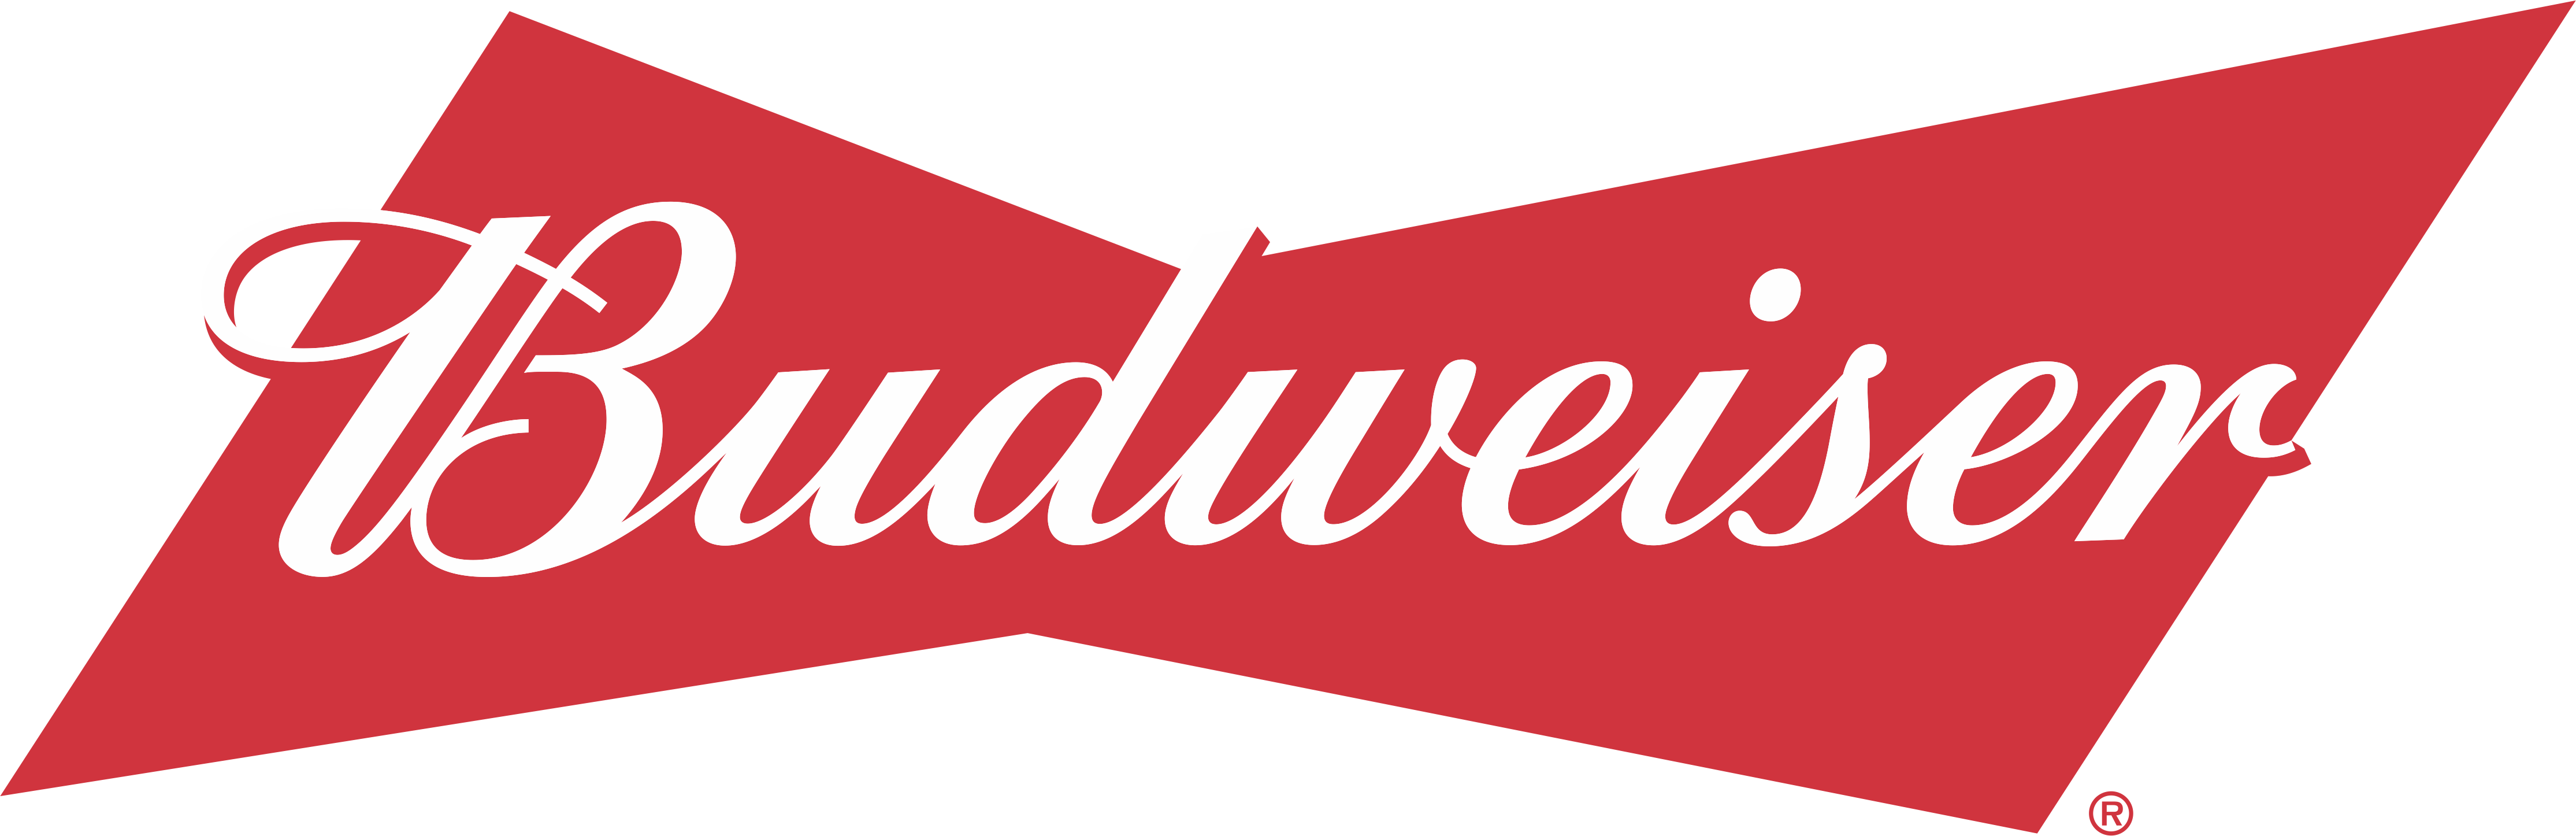 budweiser-penn-beer